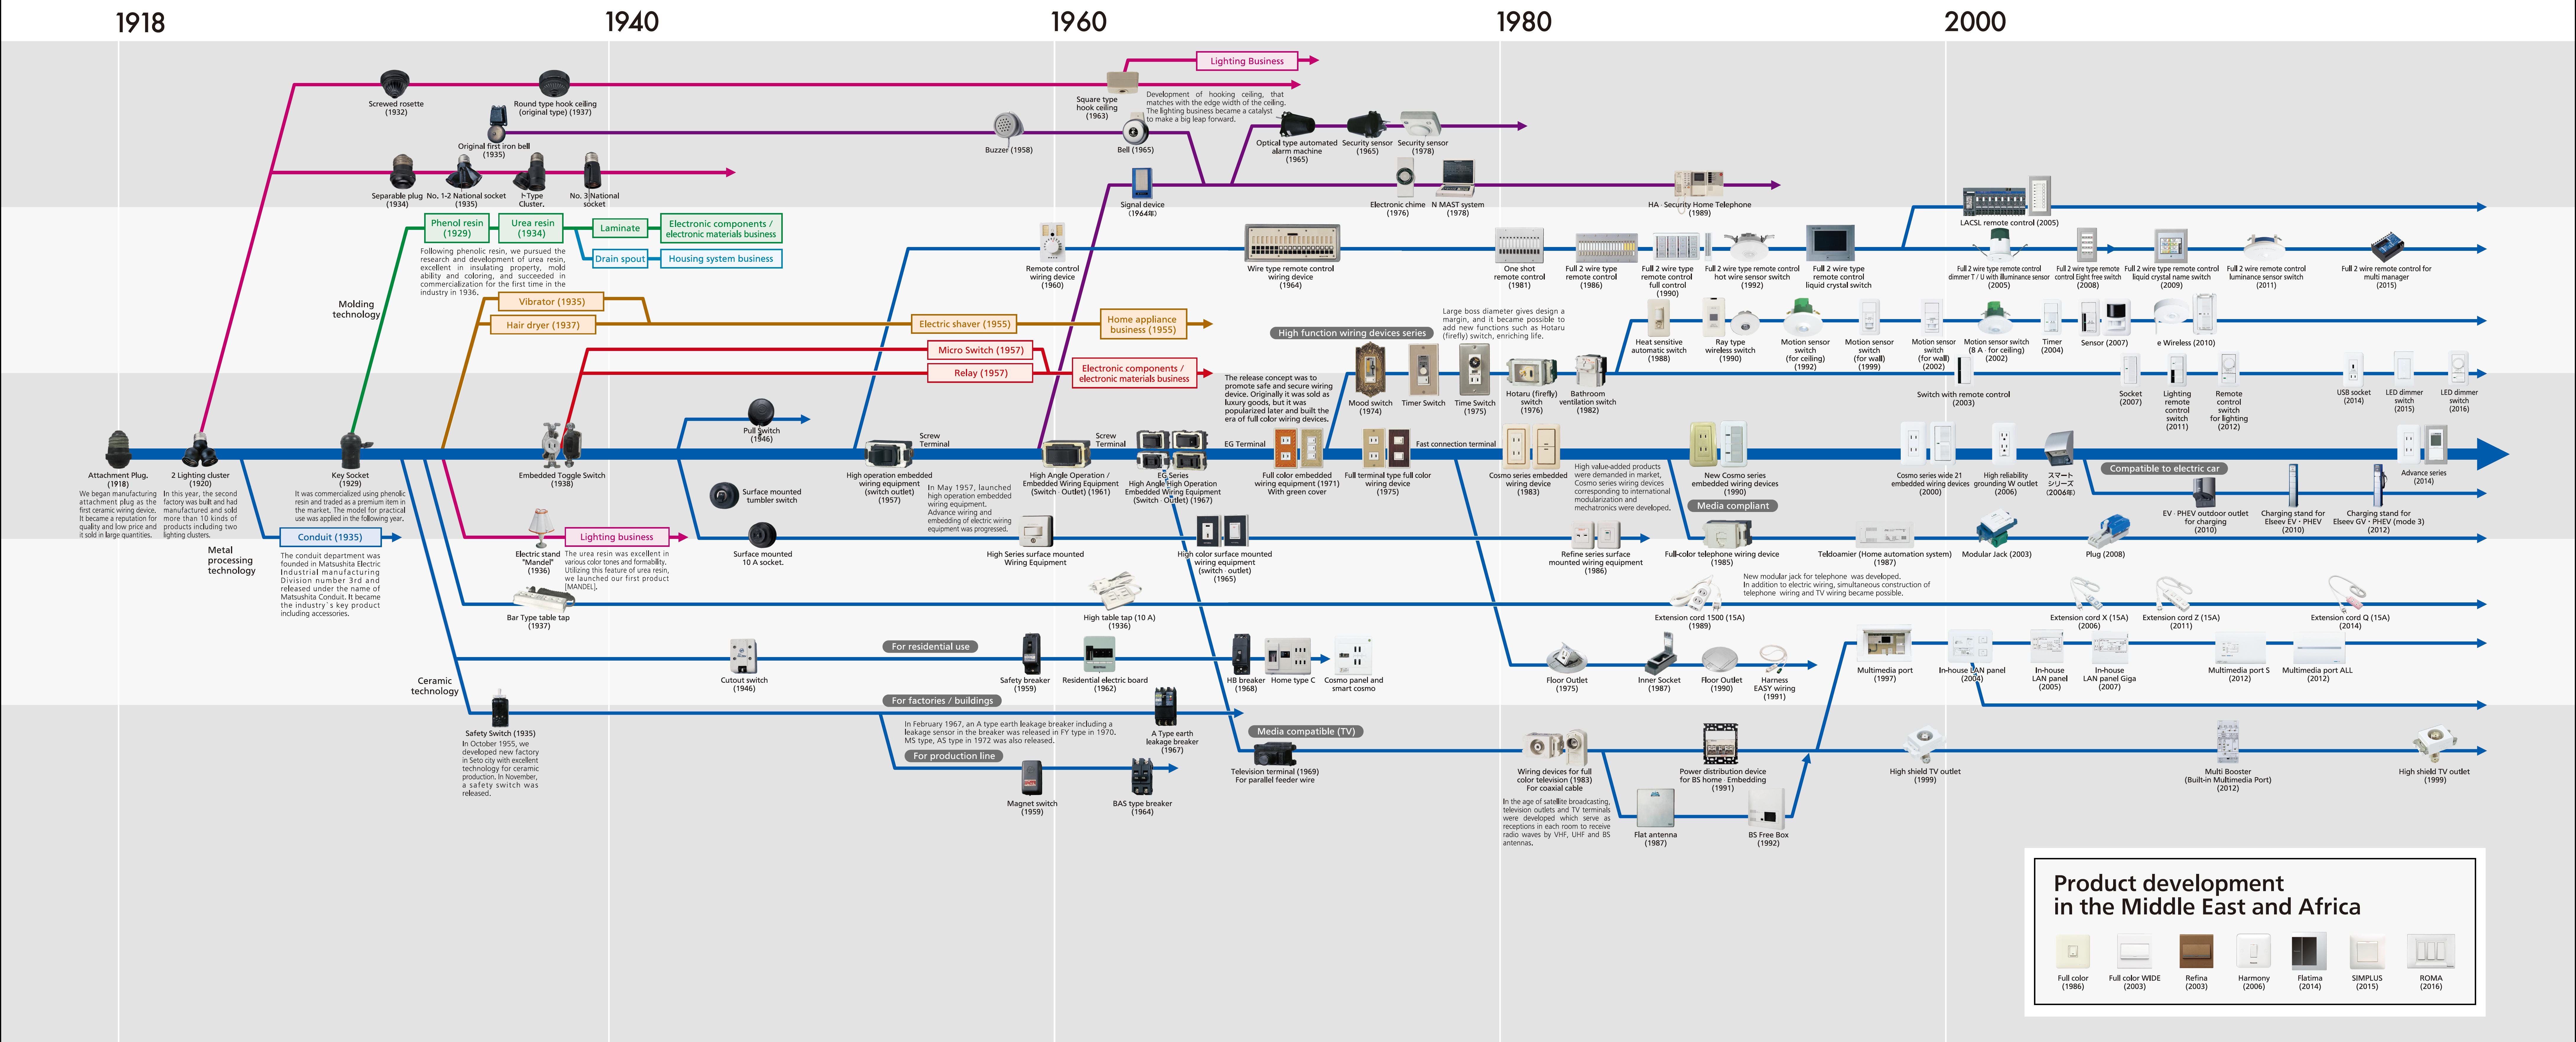 figure: Panasonic's Wiring devices - Development journey